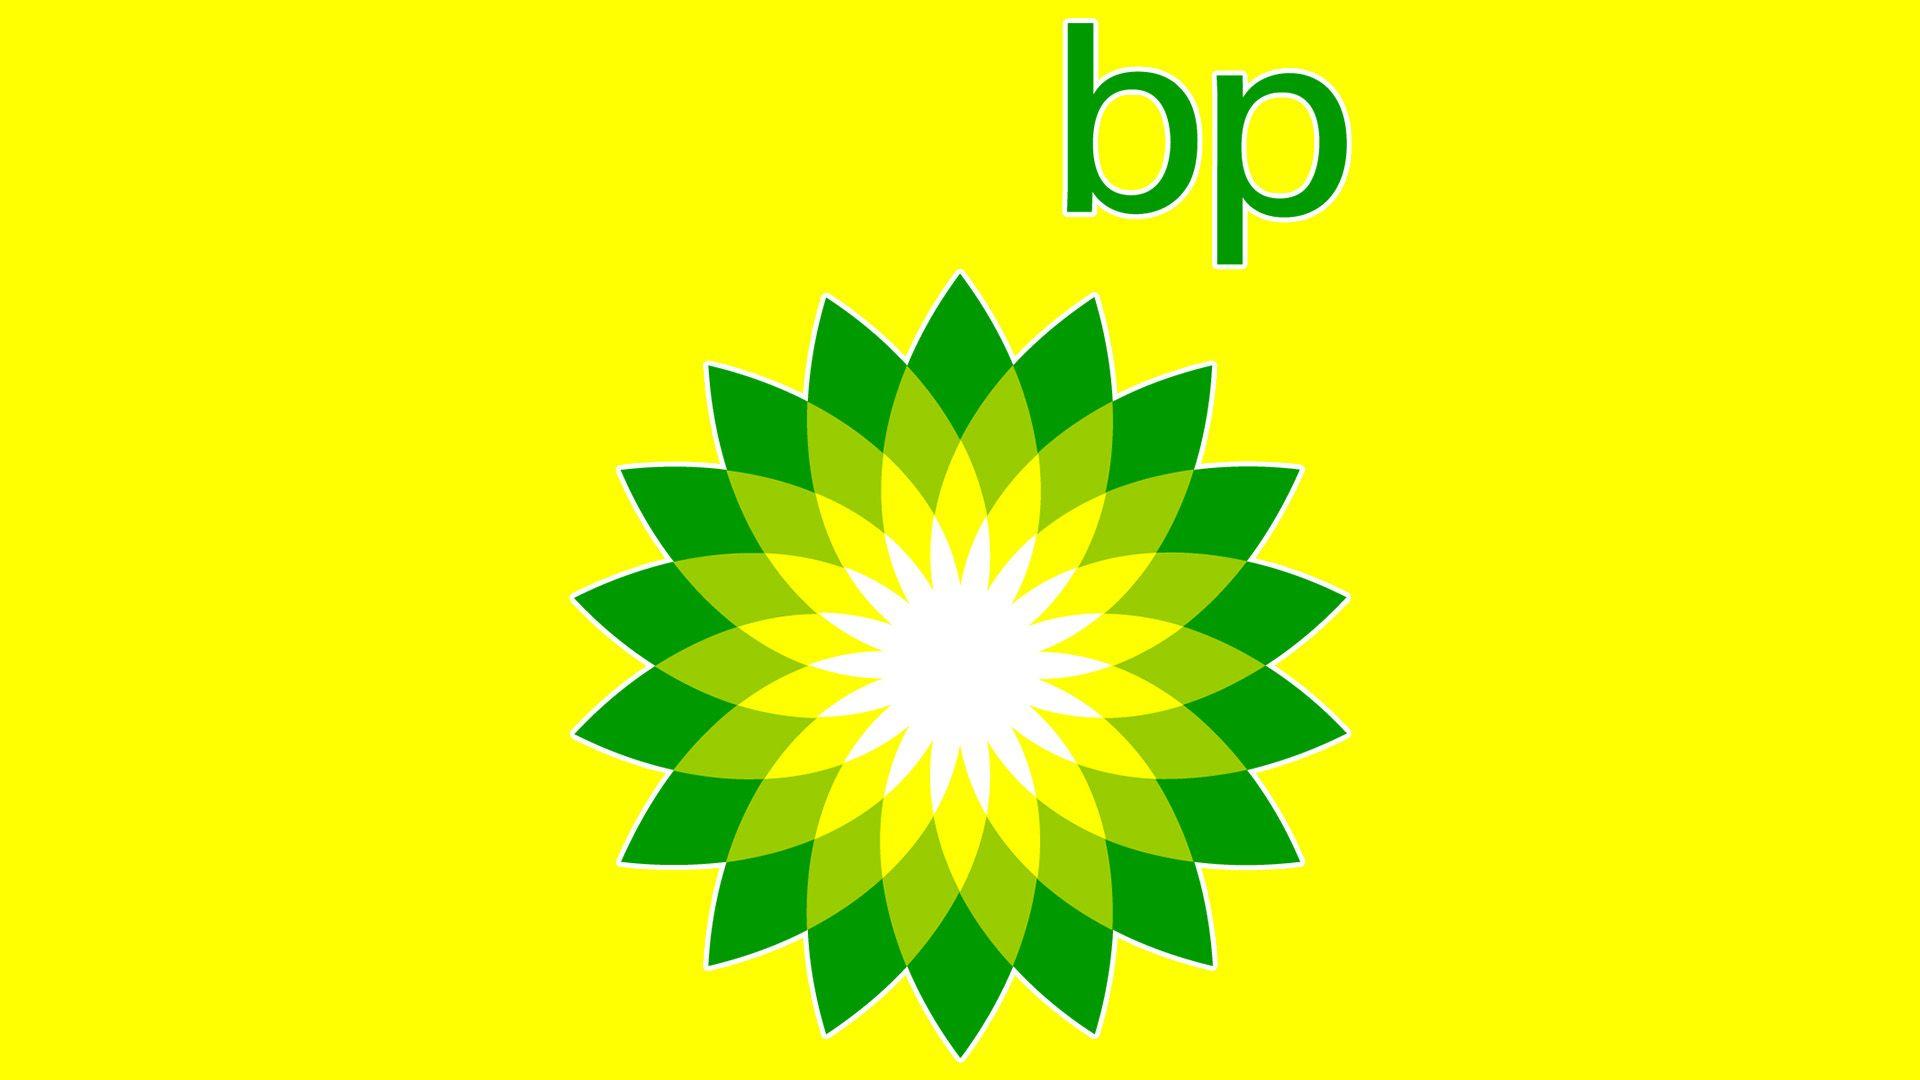 BP Green Logo - BP Logo, British Petroleum Symbol Meaning, History and Evolution